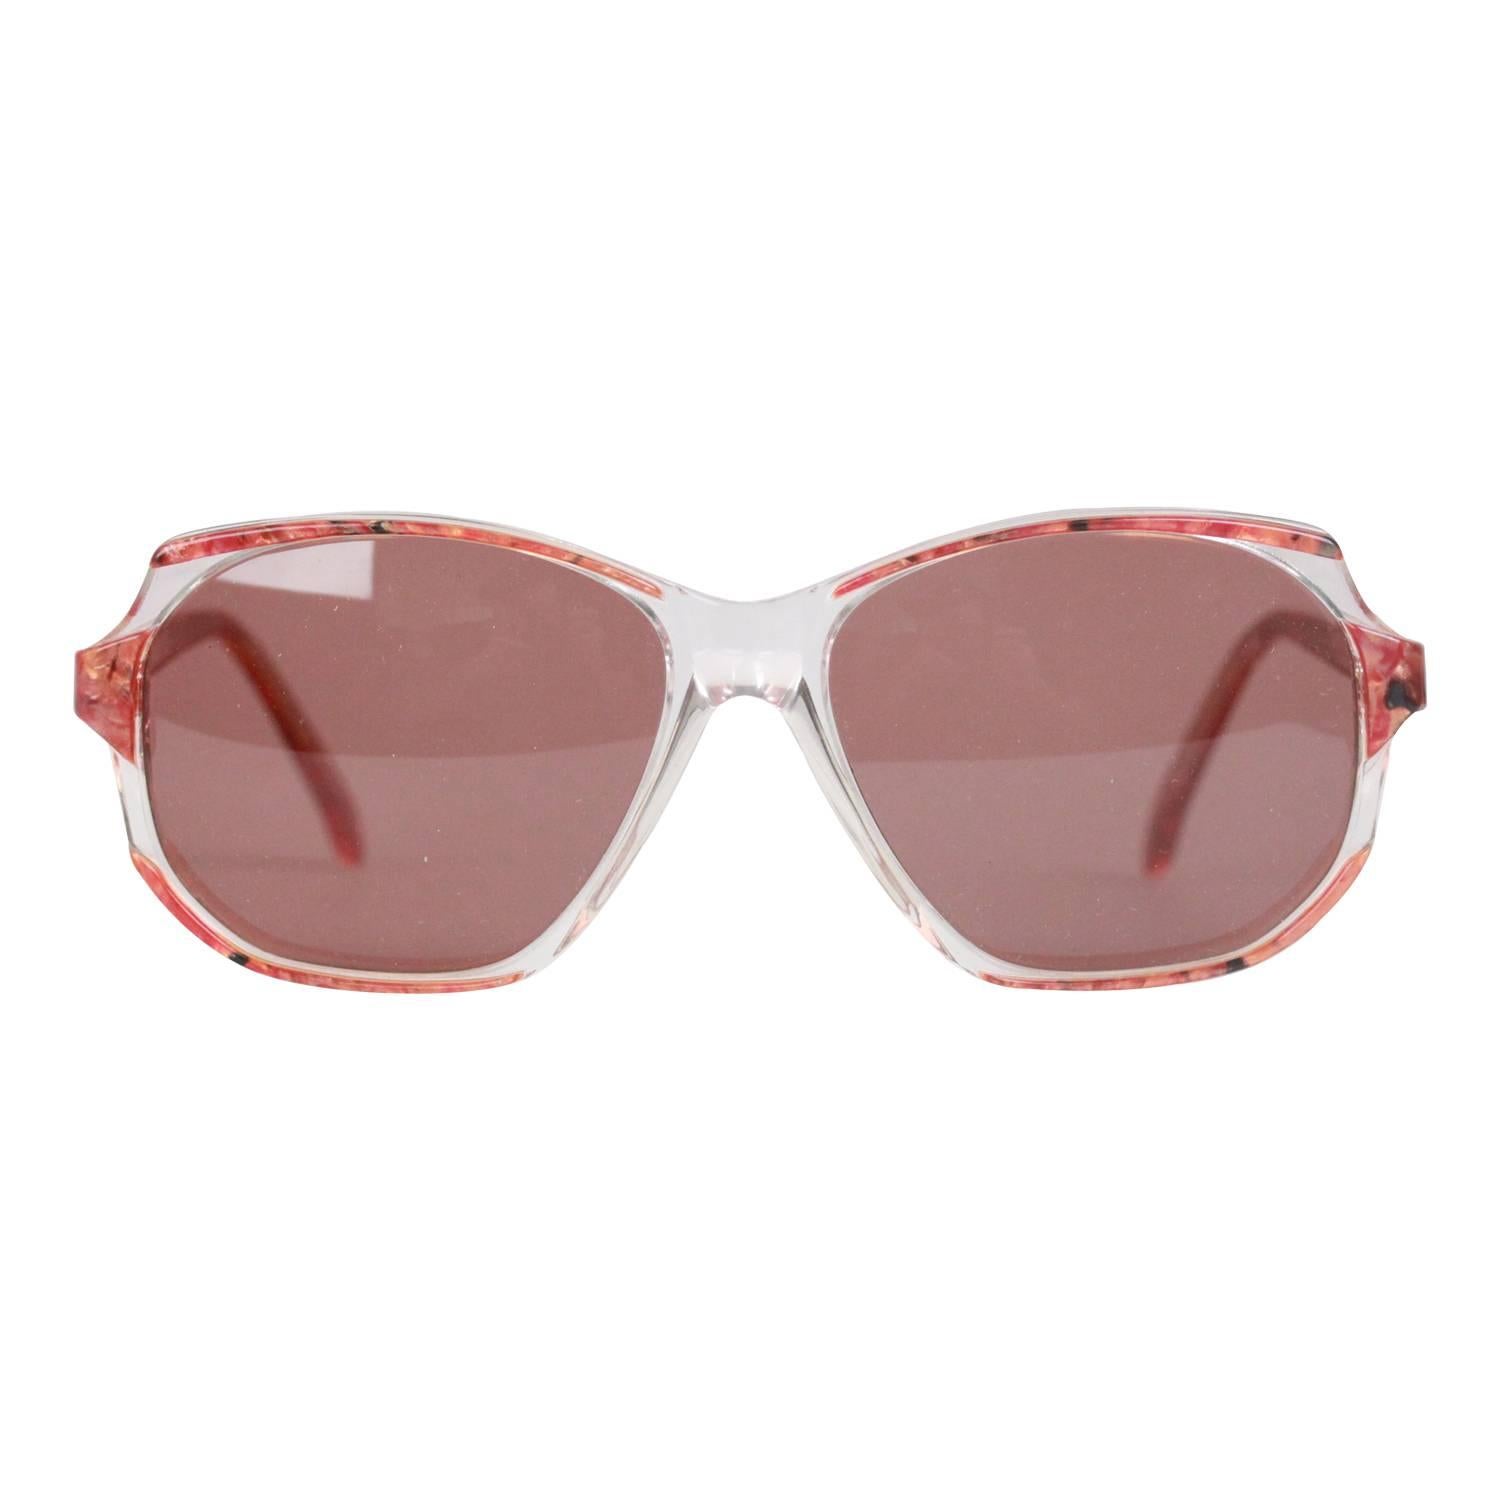 YVES SAINT LAURENT Vintage Marbled RED MINT Sunglasses NAXOS 825 56mm